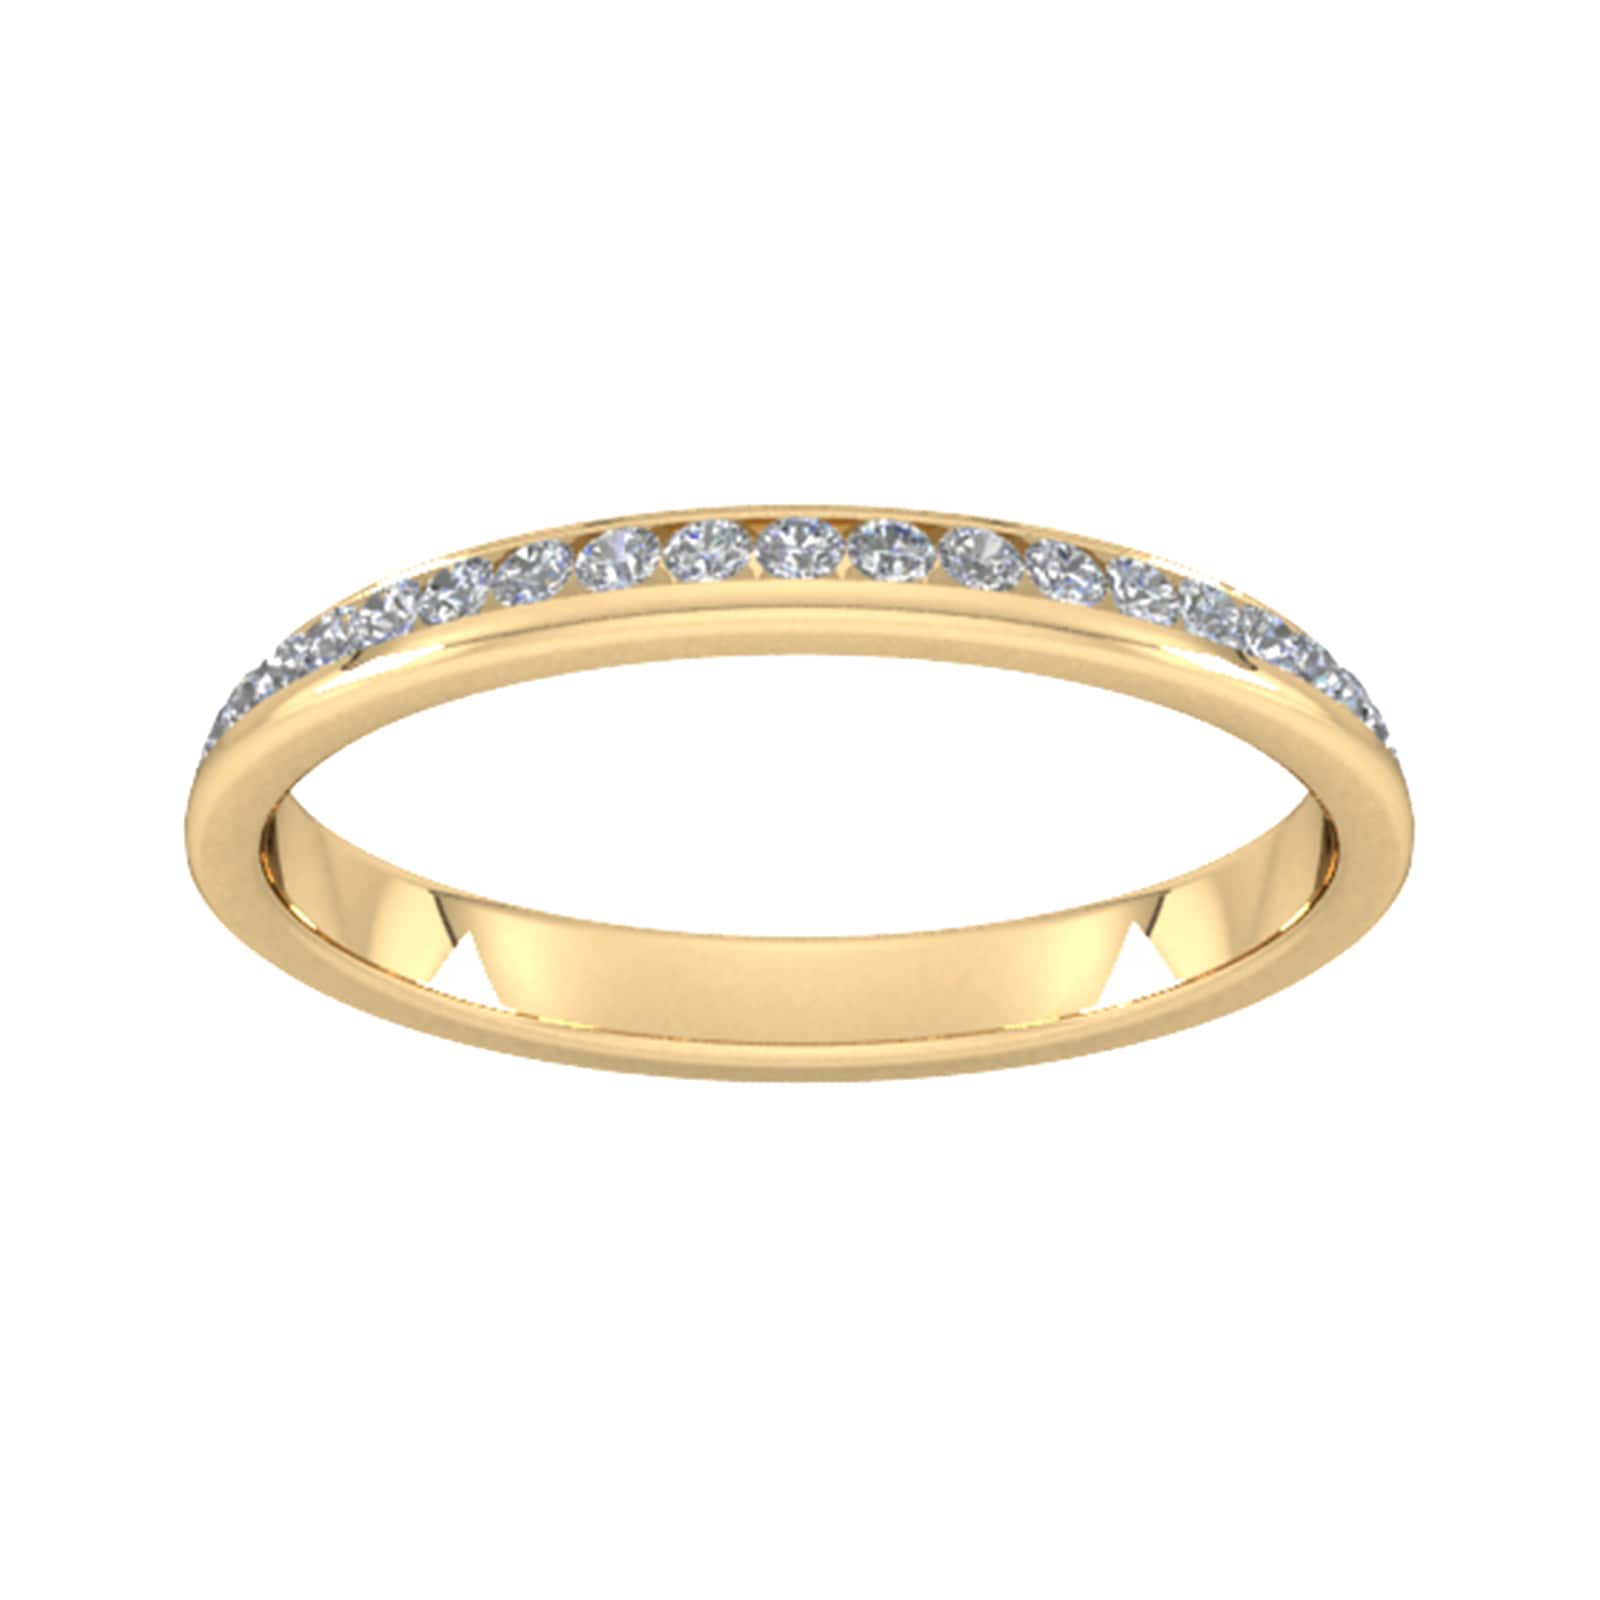 0.42 Carat Total Weight Brilliant Cut Full Diamond Set Pyramid Style Wedding Ring In 18 Carat Yellow Gold - Ring Size U